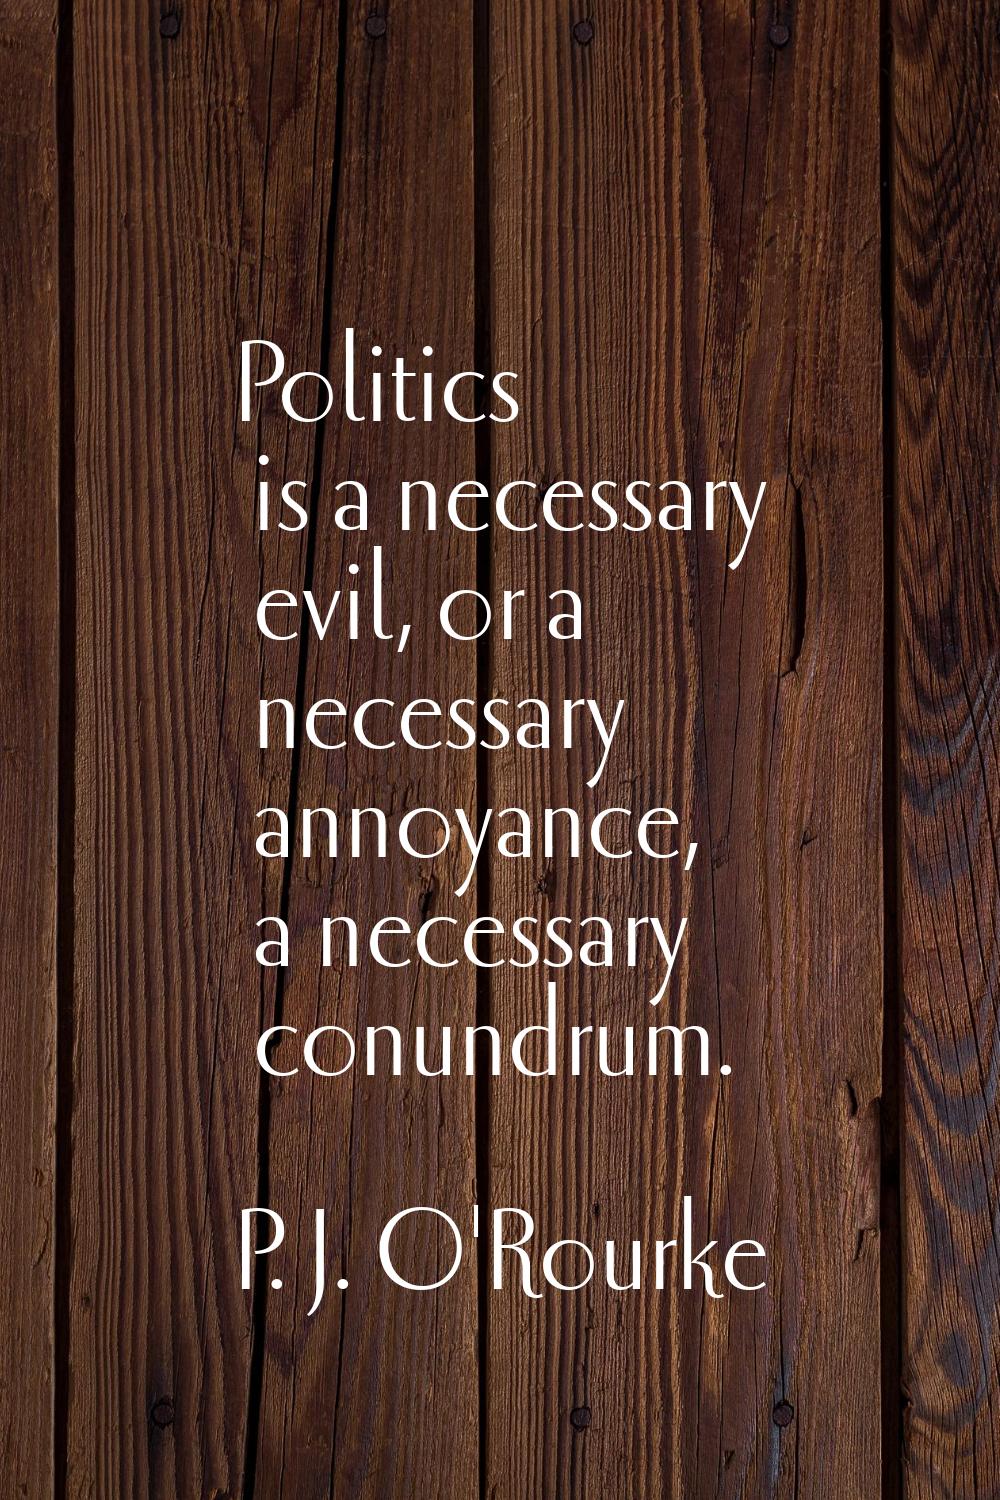 Politics is a necessary evil, or a necessary annoyance, a necessary conundrum.